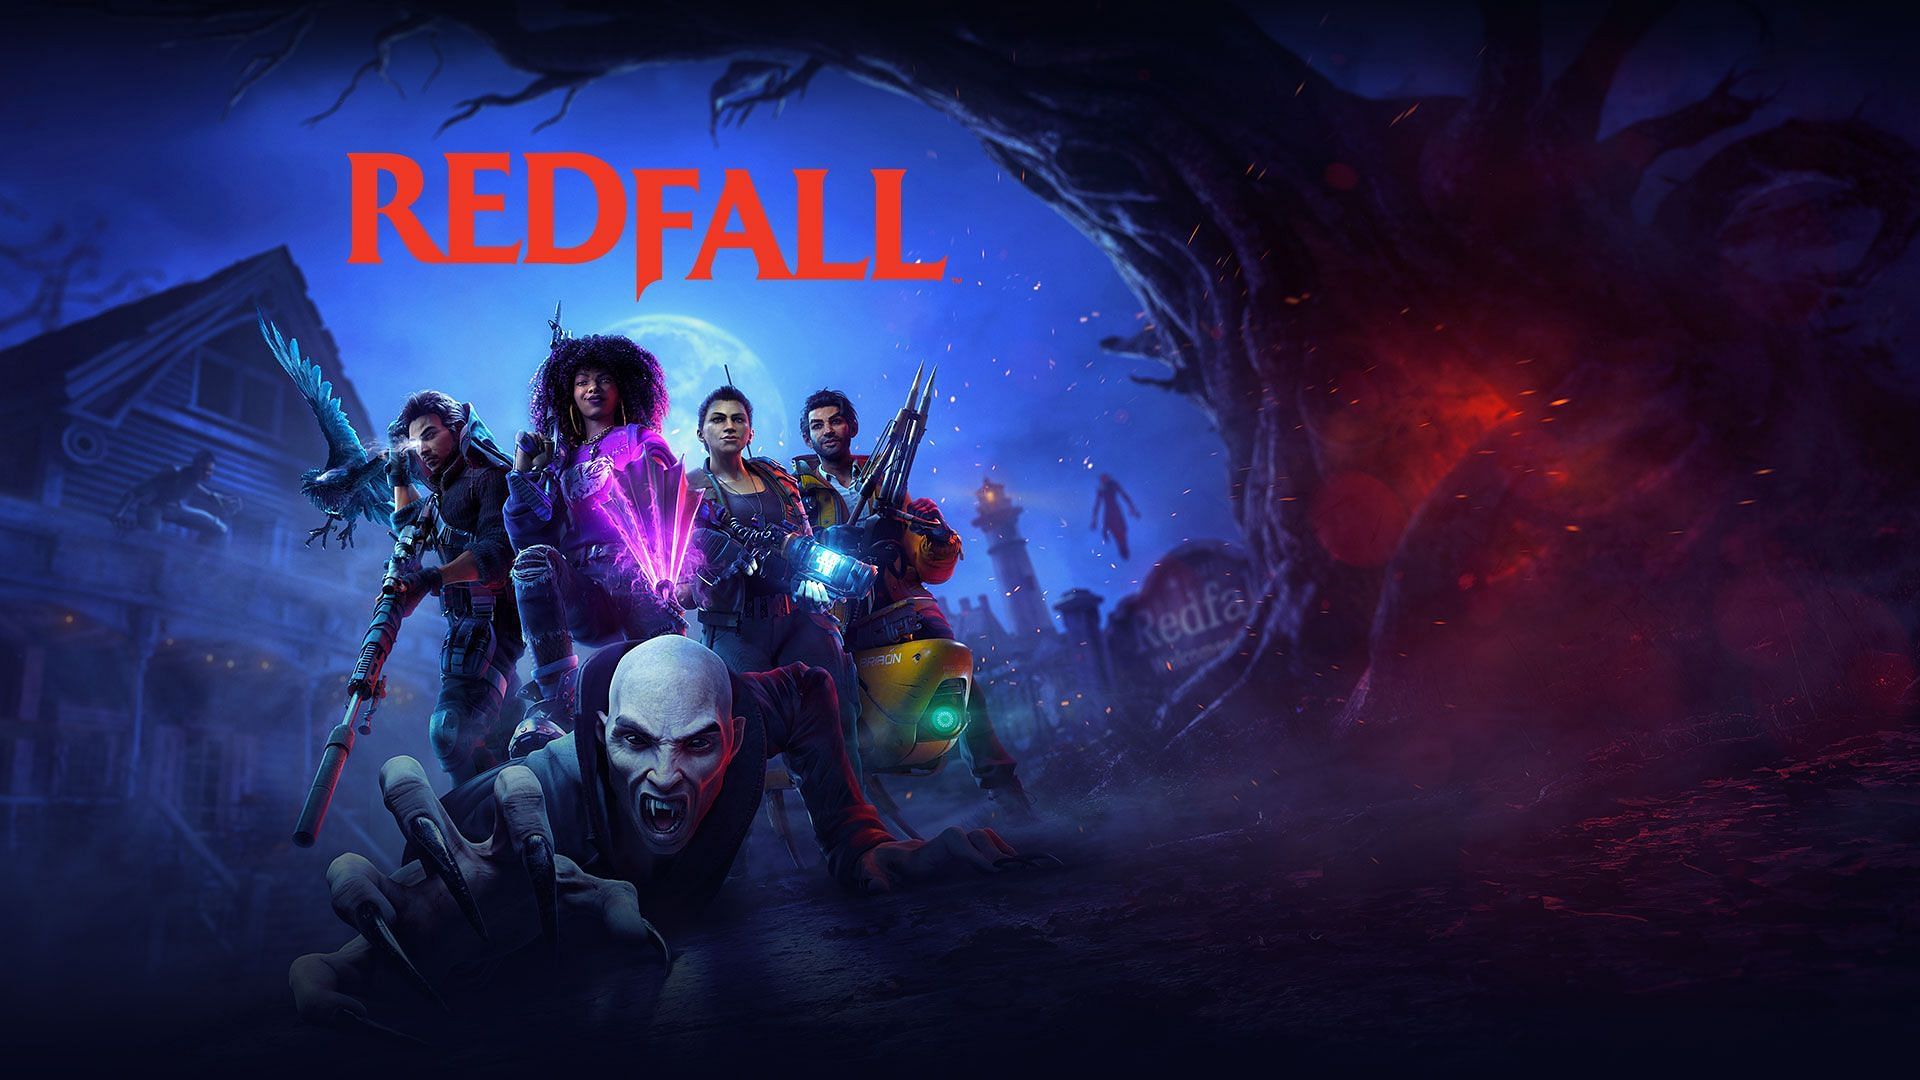 redfall release date 09/09/19